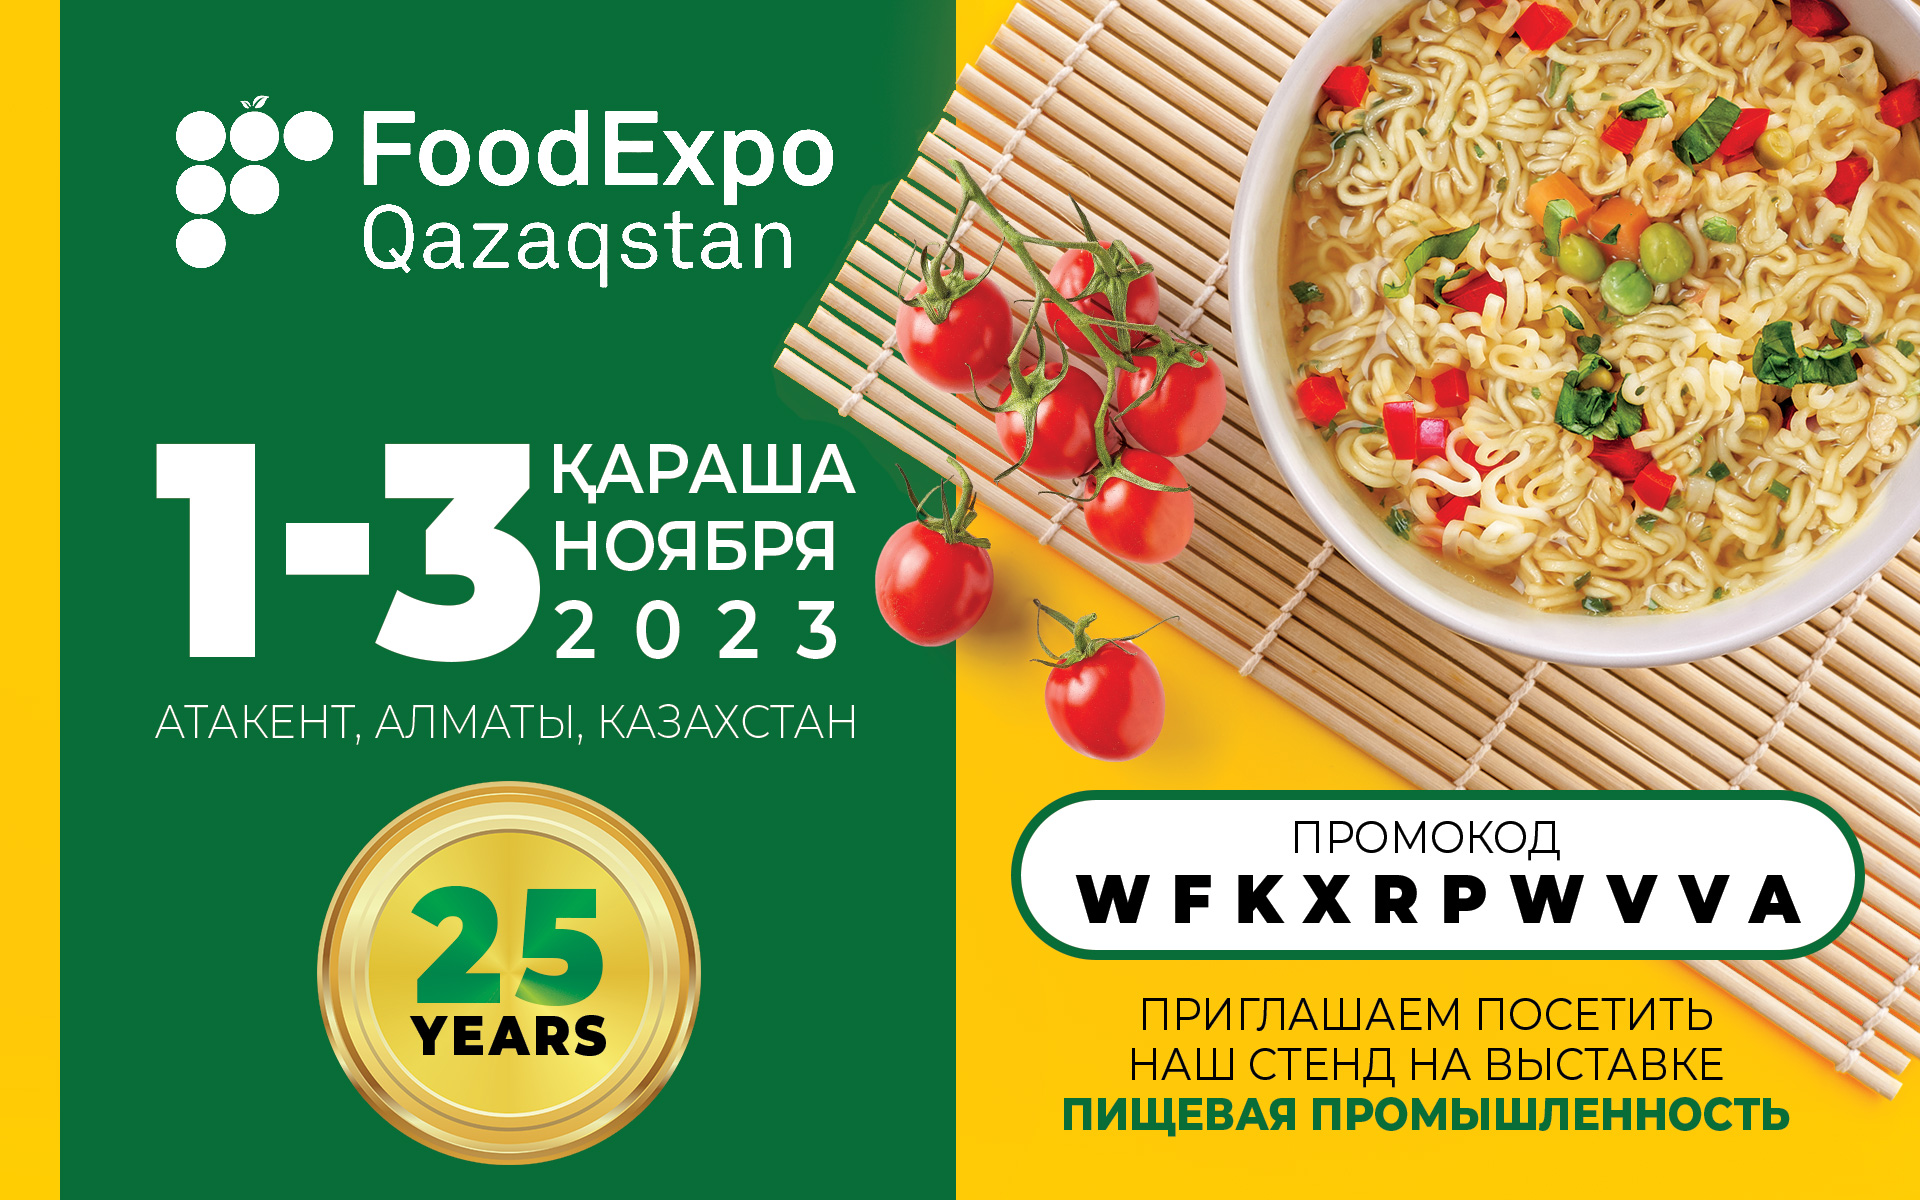 Встречайте «Маревен Фуд Тянь-Шань» на выставке FoodExpo Qazaqstan 2023